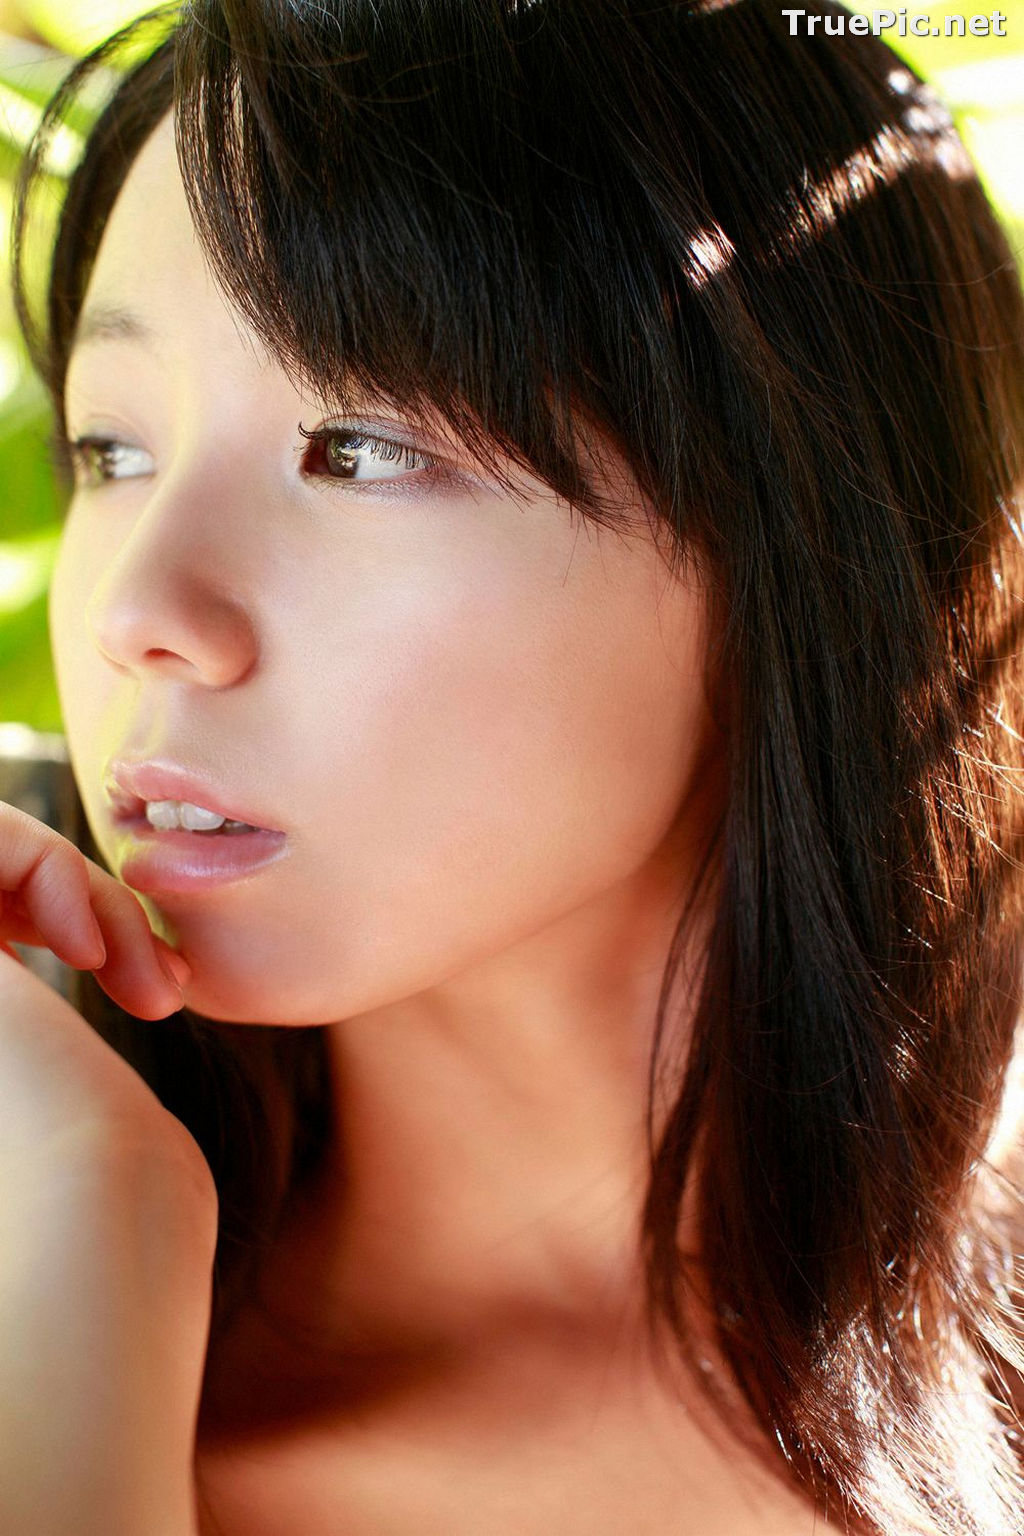 Image [YS Web] Vol.482 - Japanese actress Rina Koike - Graduation Side Story - TruePic.net - Picture-39